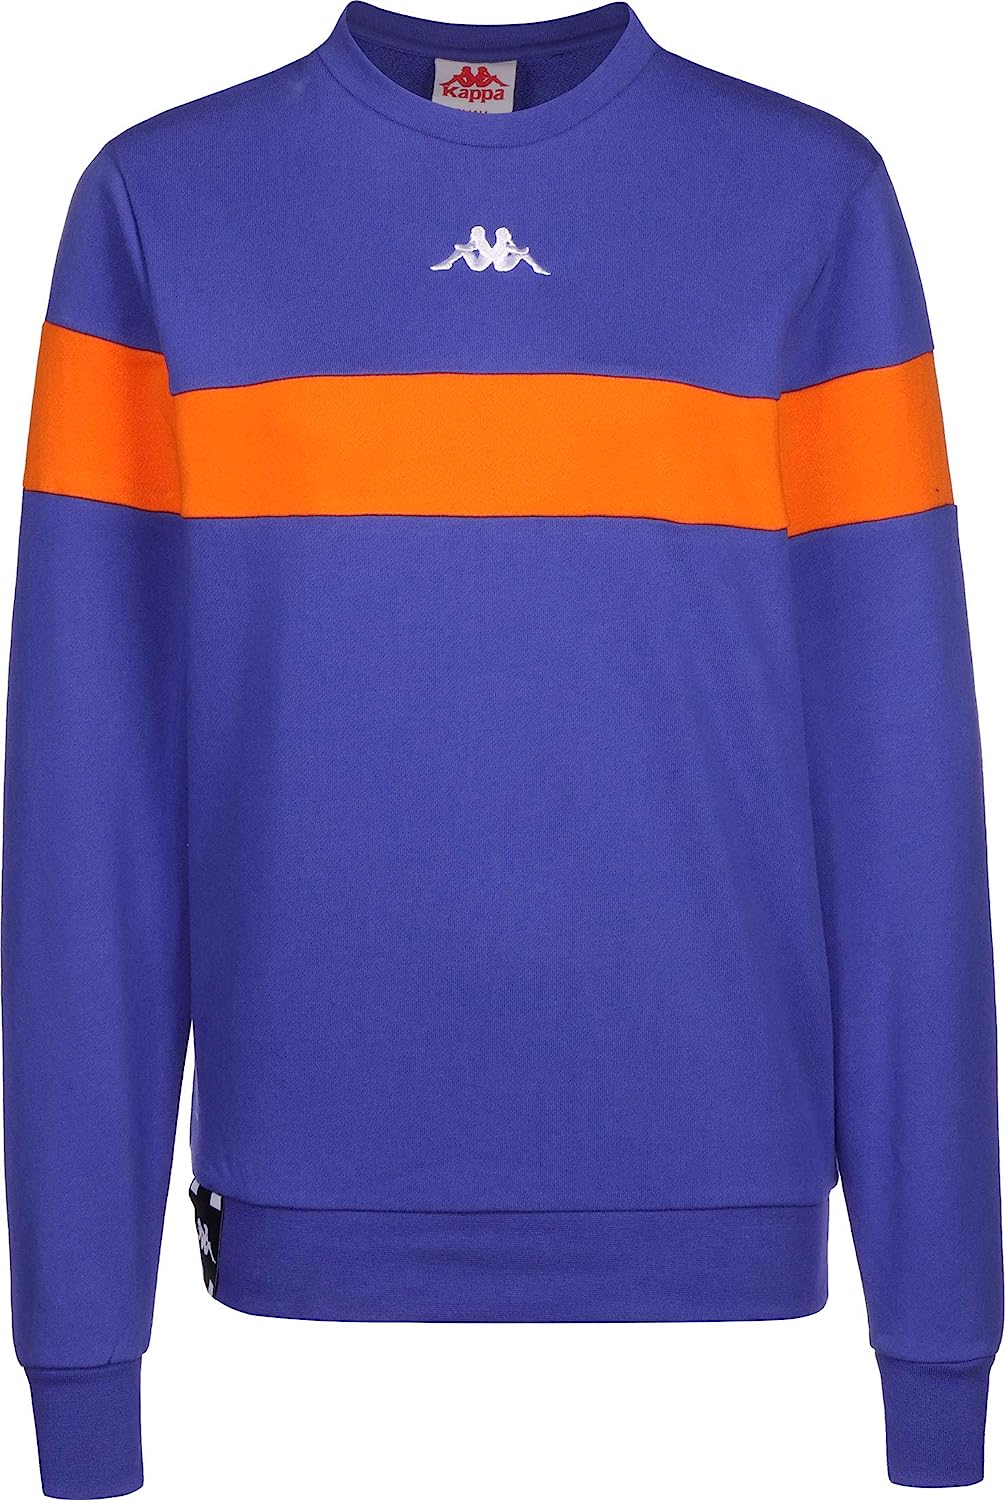 Kappa men&#39;s sweatshirt in Authentic LA CEMARS 304SV30 912 blue royal-orange